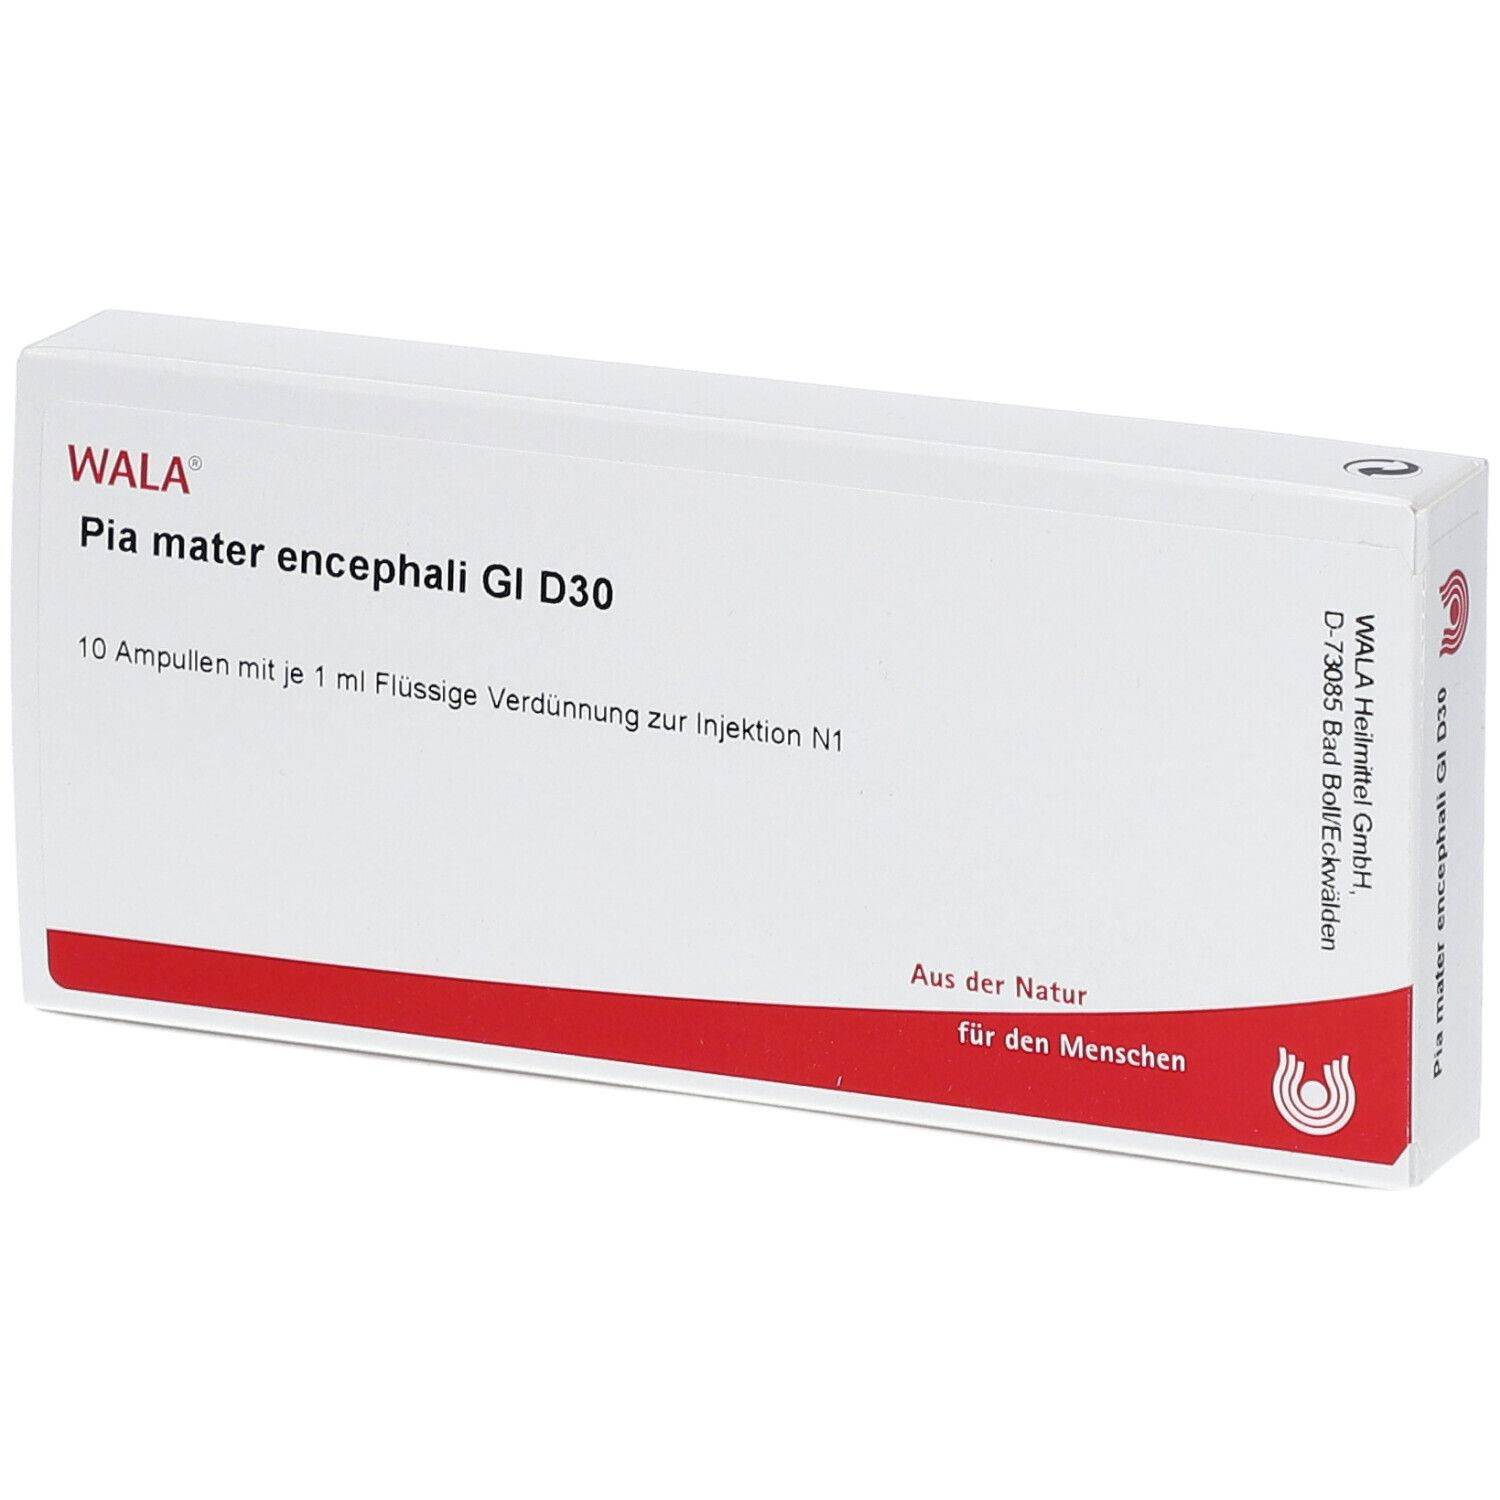 WALA® Pia mater encephali Gl D 30